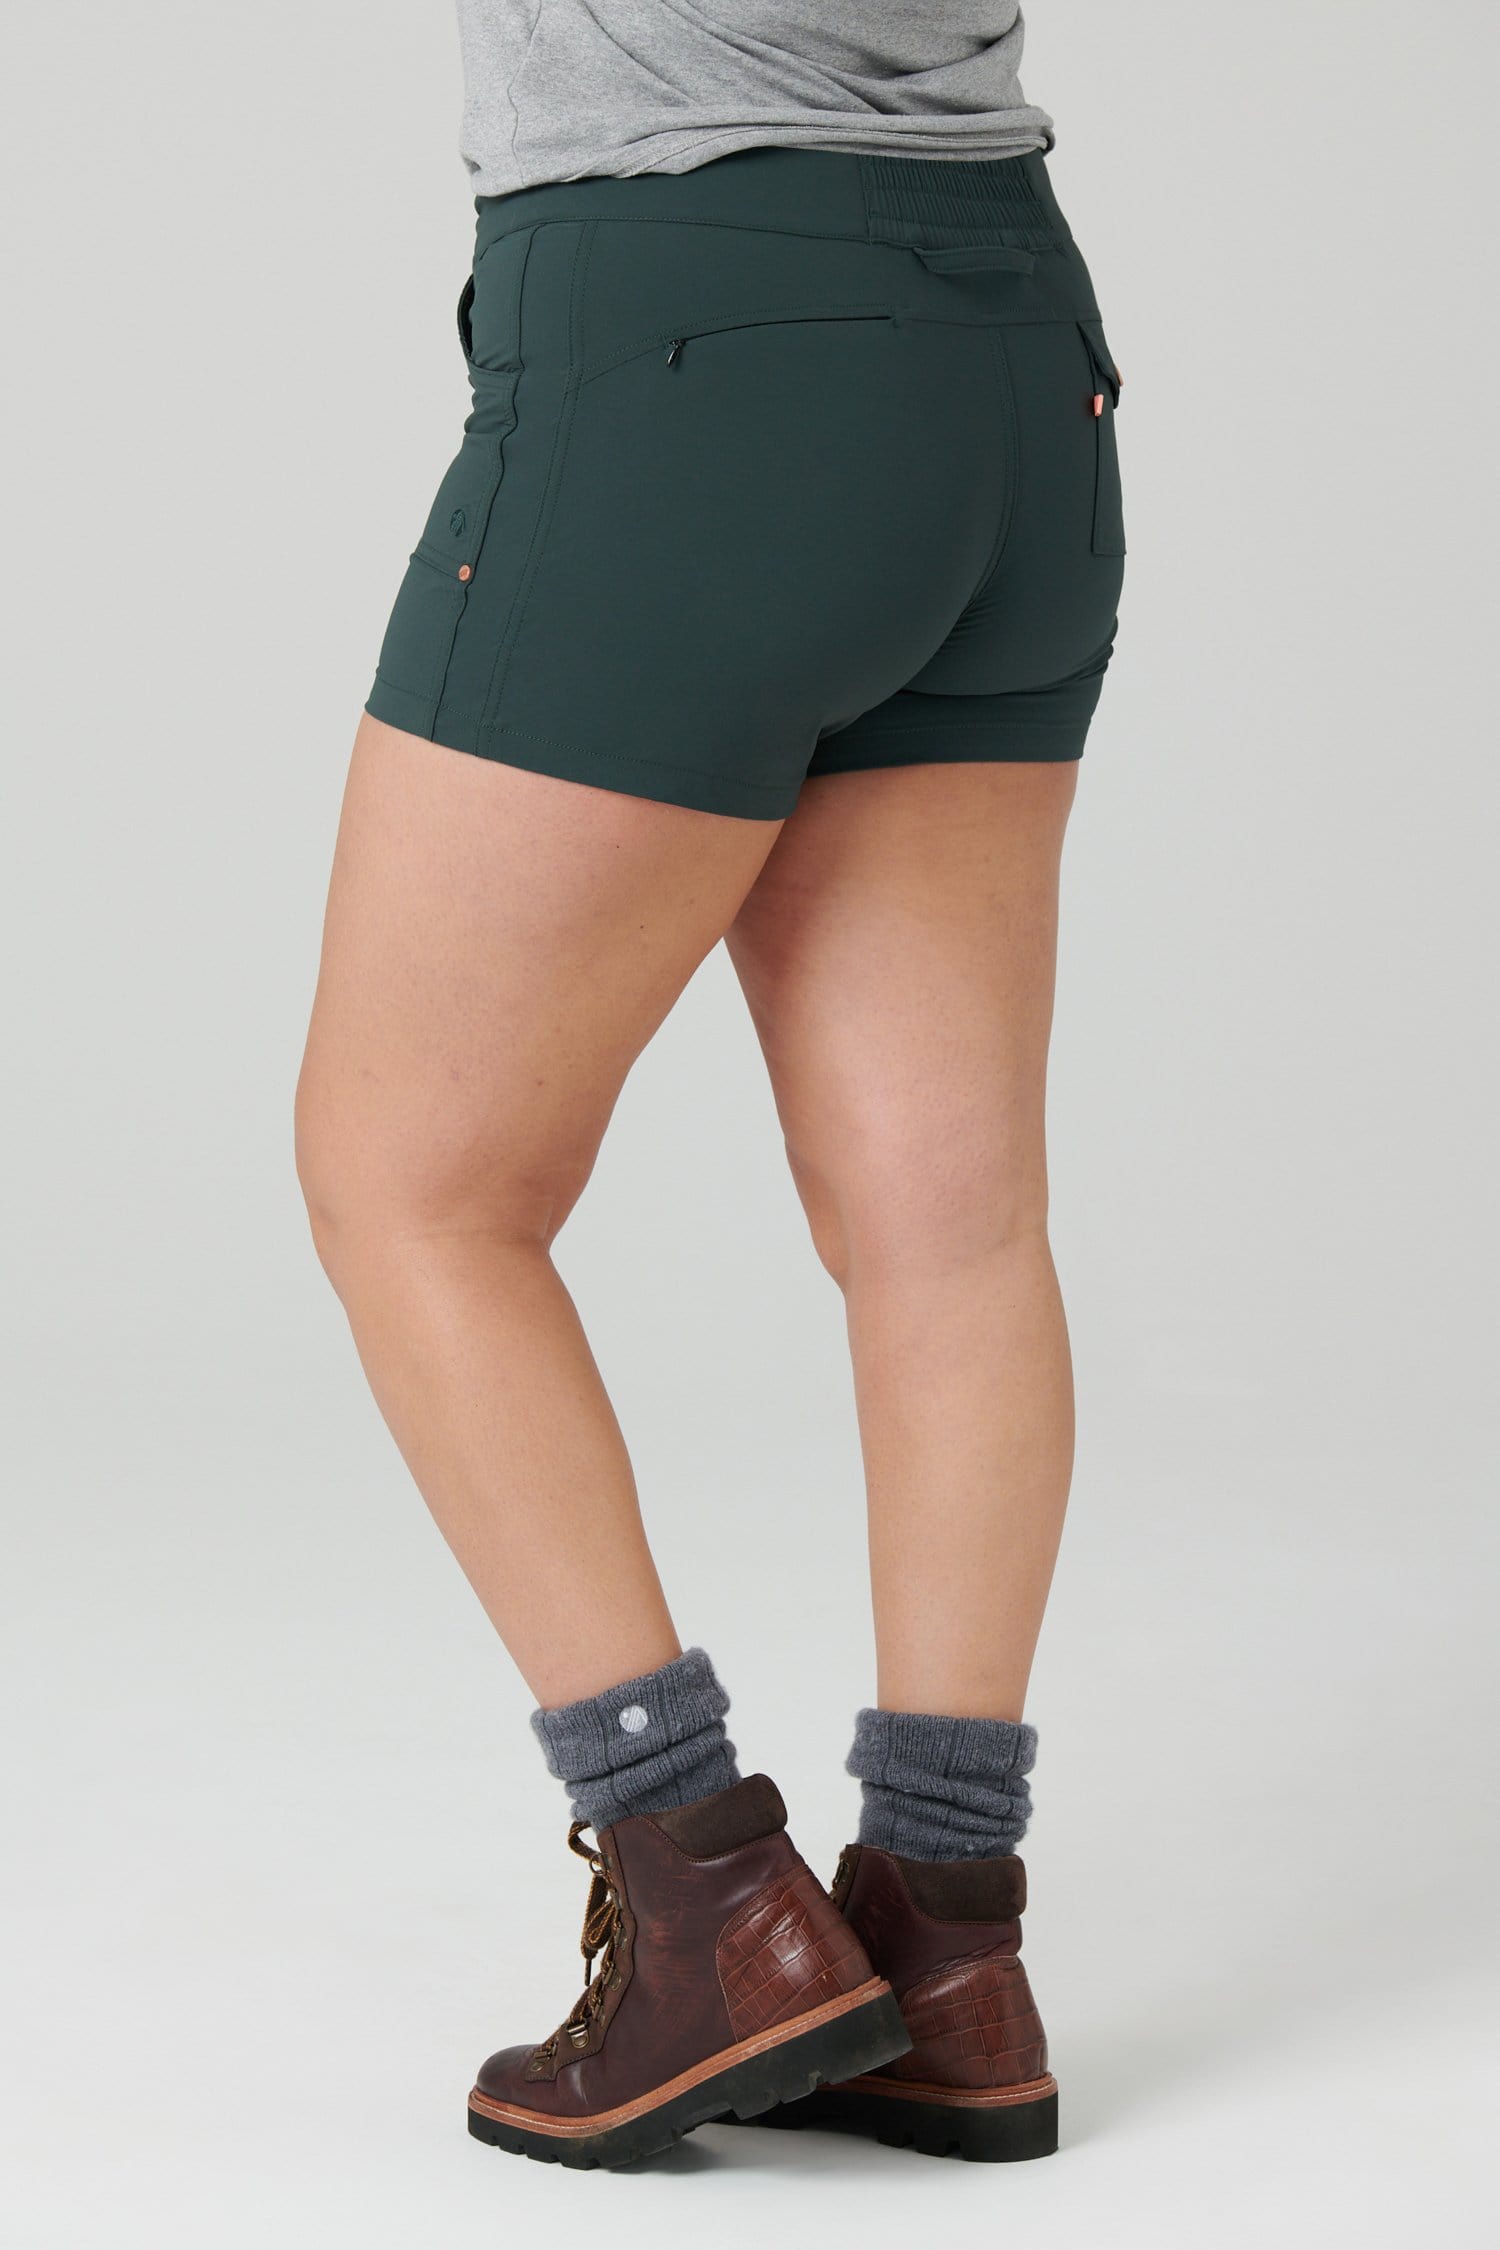 Trek Shorts - Forest Green Shorts  